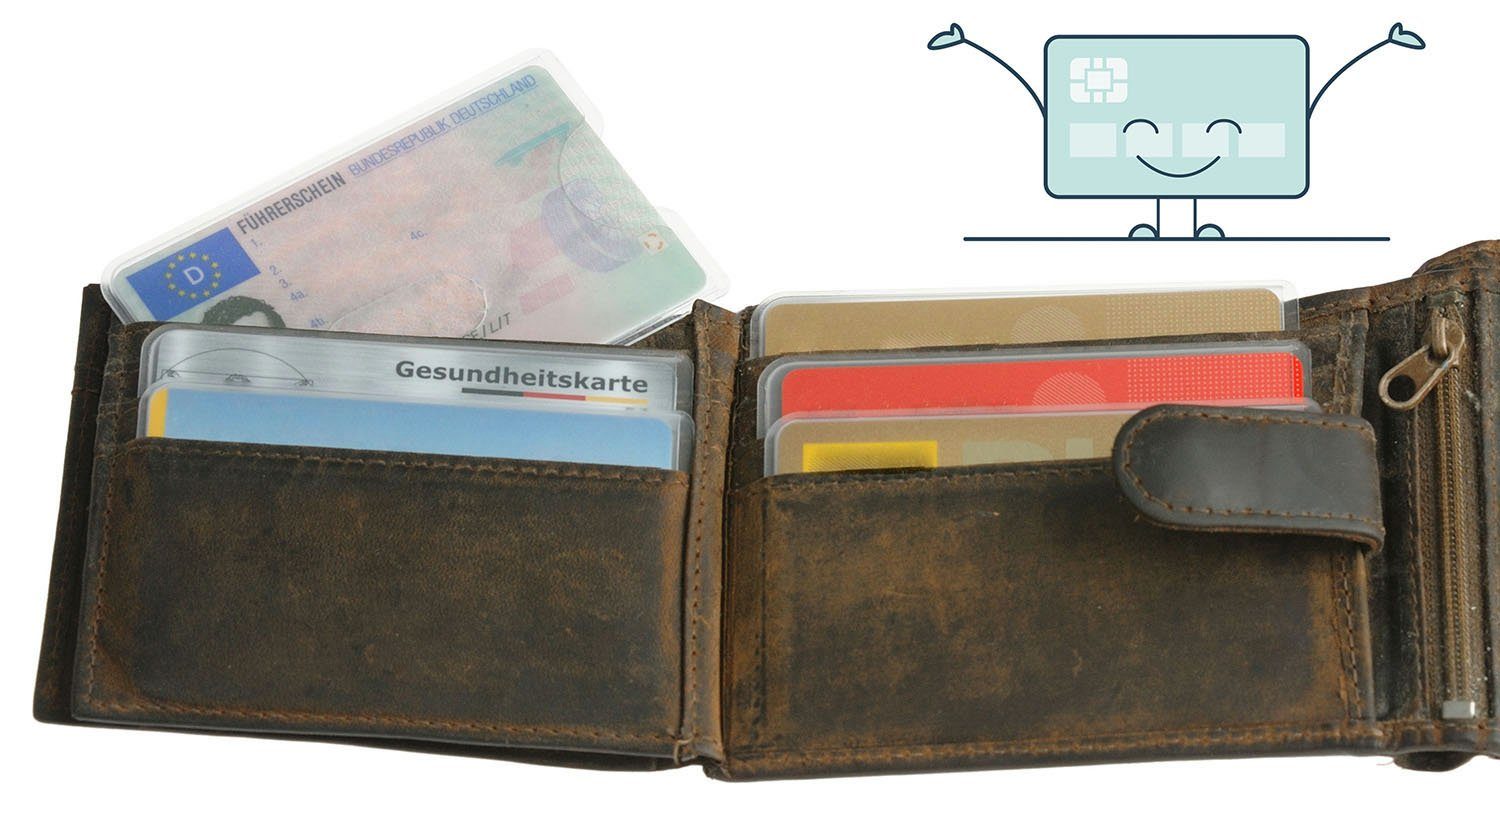 valonic Etui valonic 59 mm - 12 x 91 Stück Kreditkartenhüllen